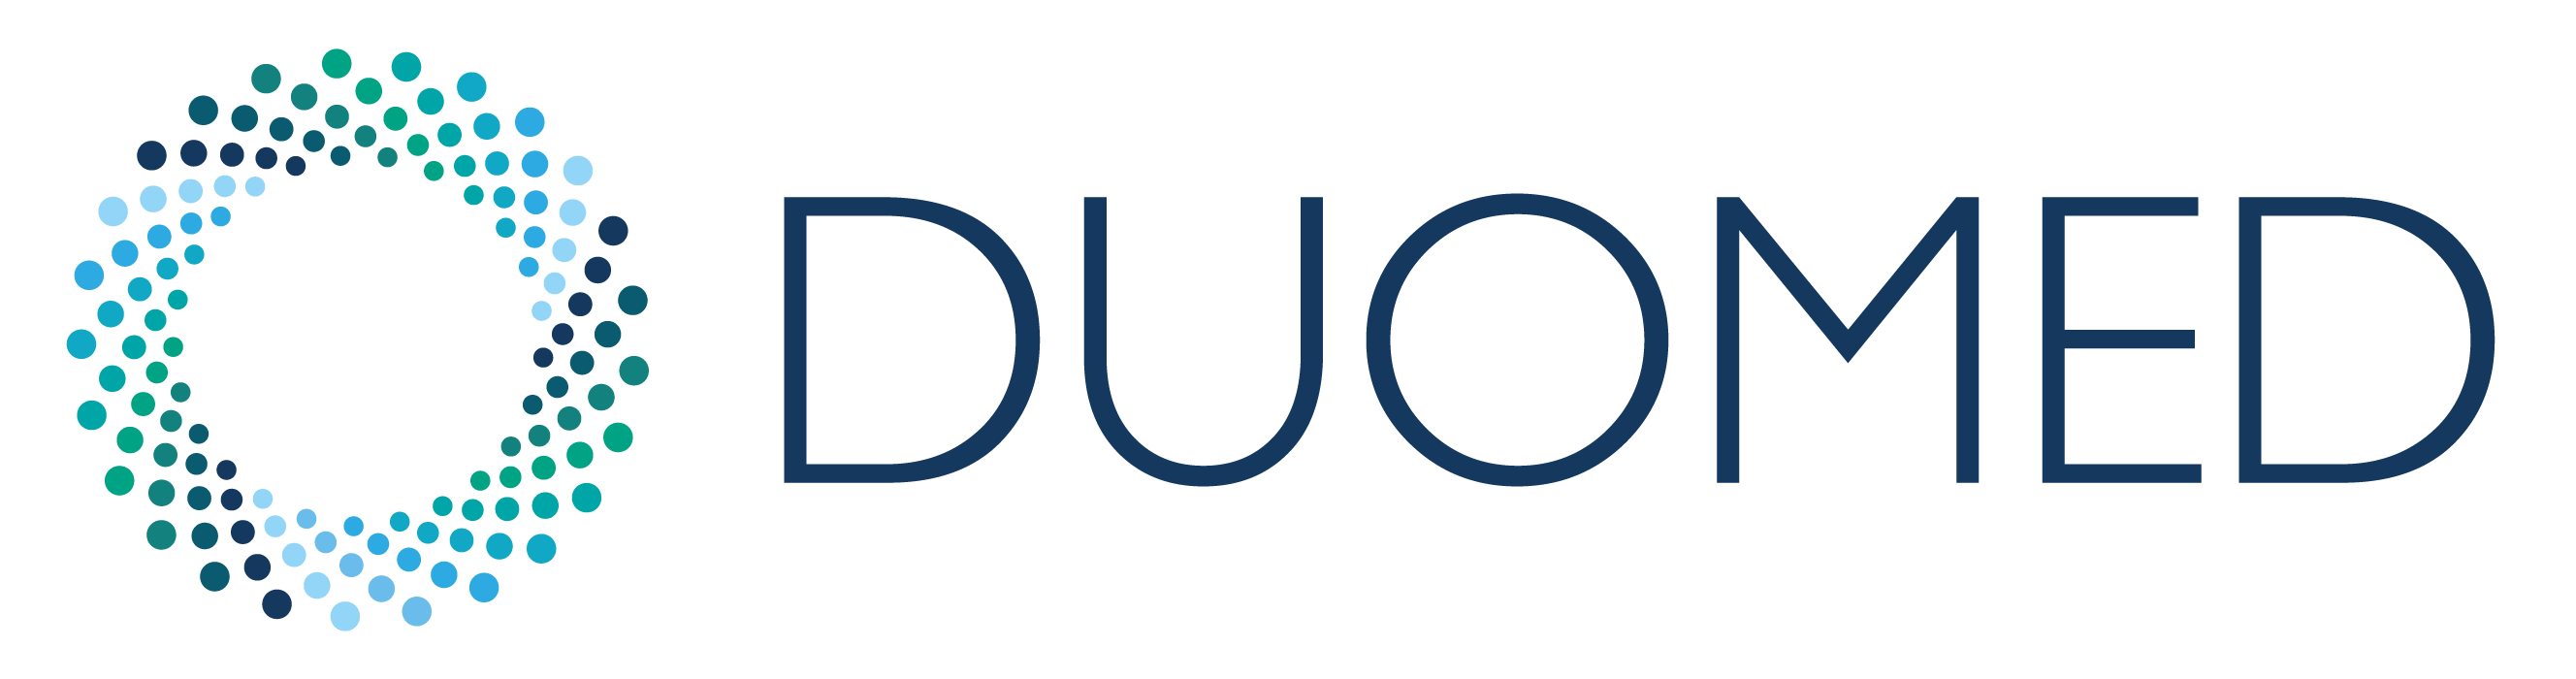 Logo duomed